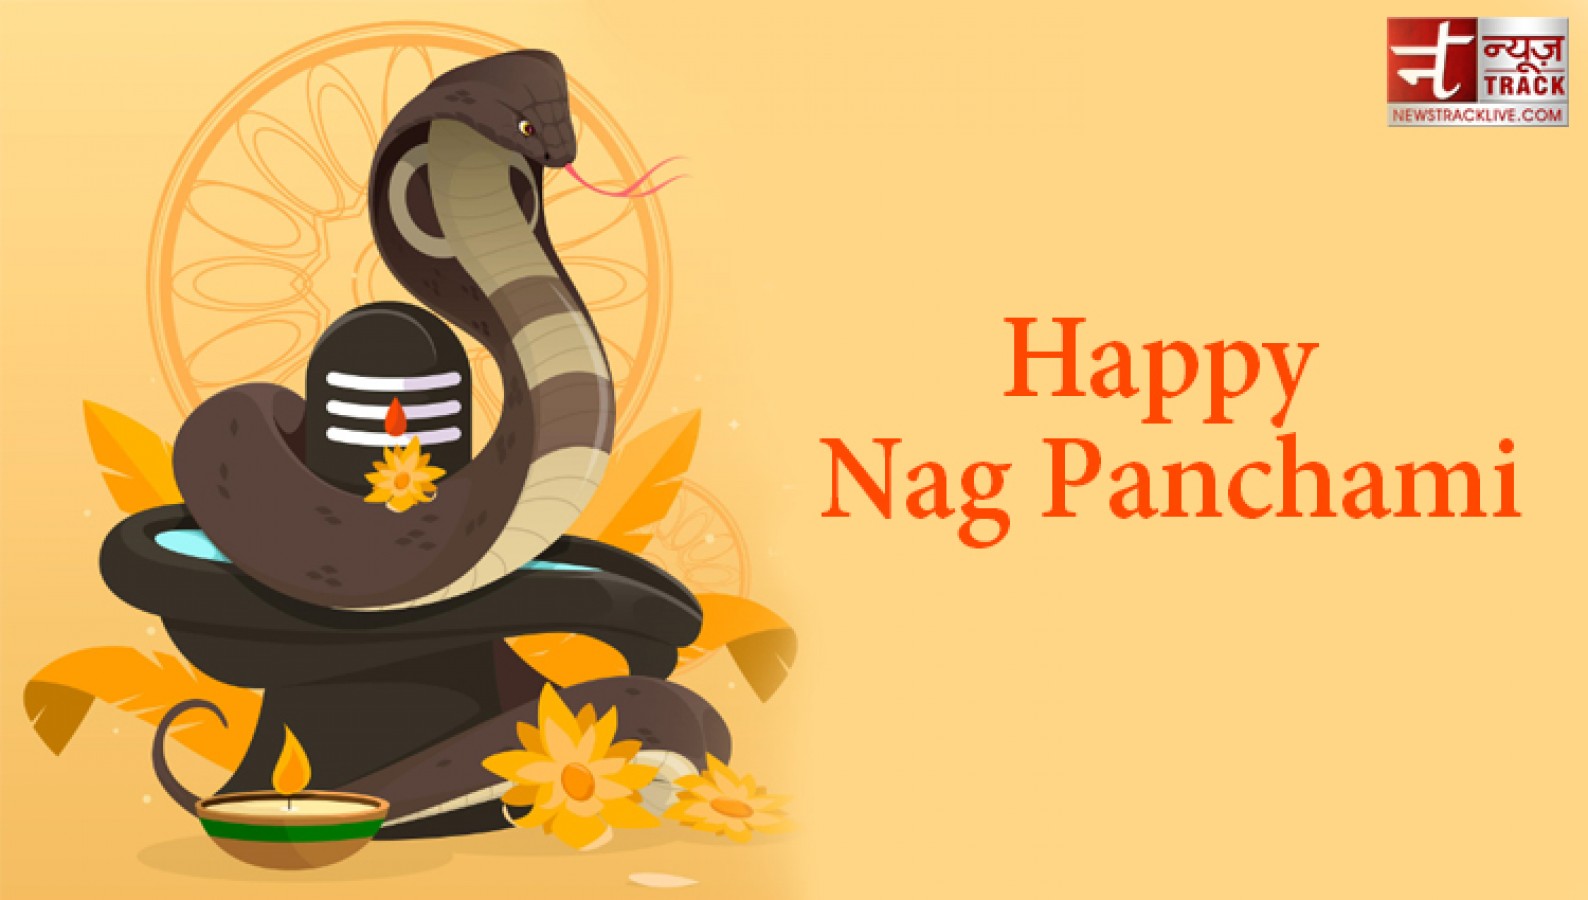 Happy Nag Panchami images and greetings to share | NewsTrack English 1